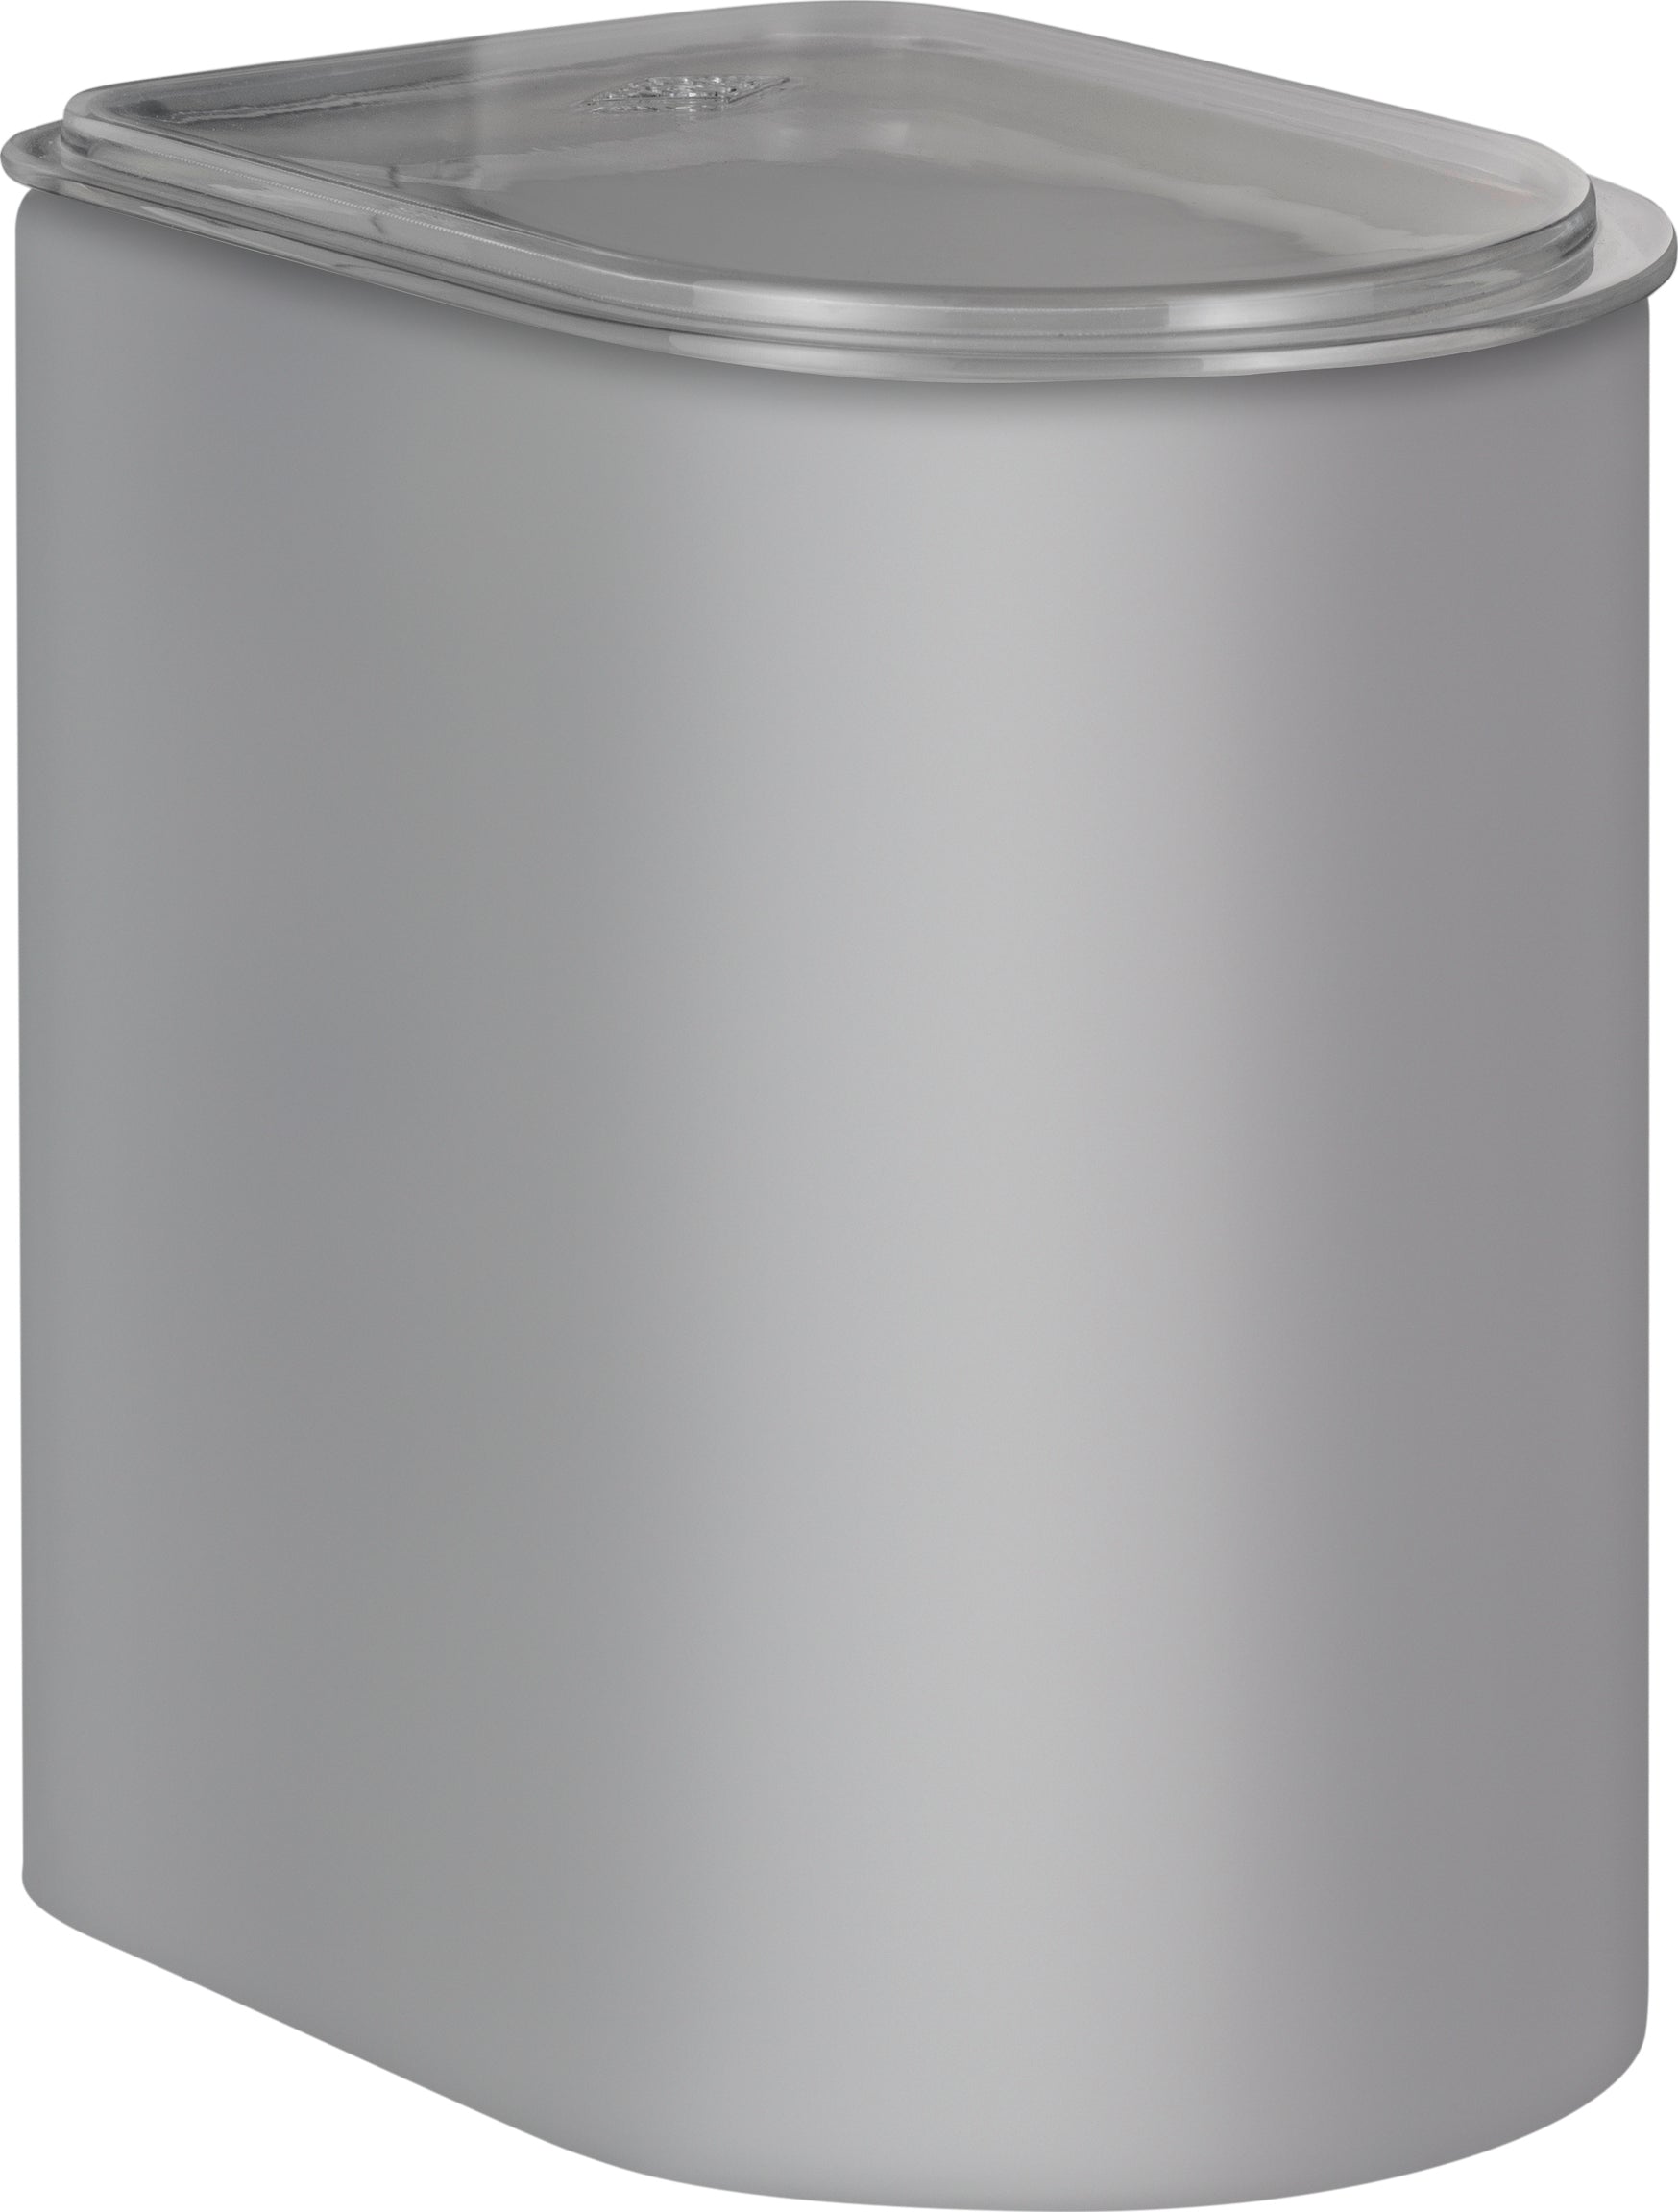 Wesco Kanister 2,2 Liter mit Acryldeckel, cooler grauer Matt